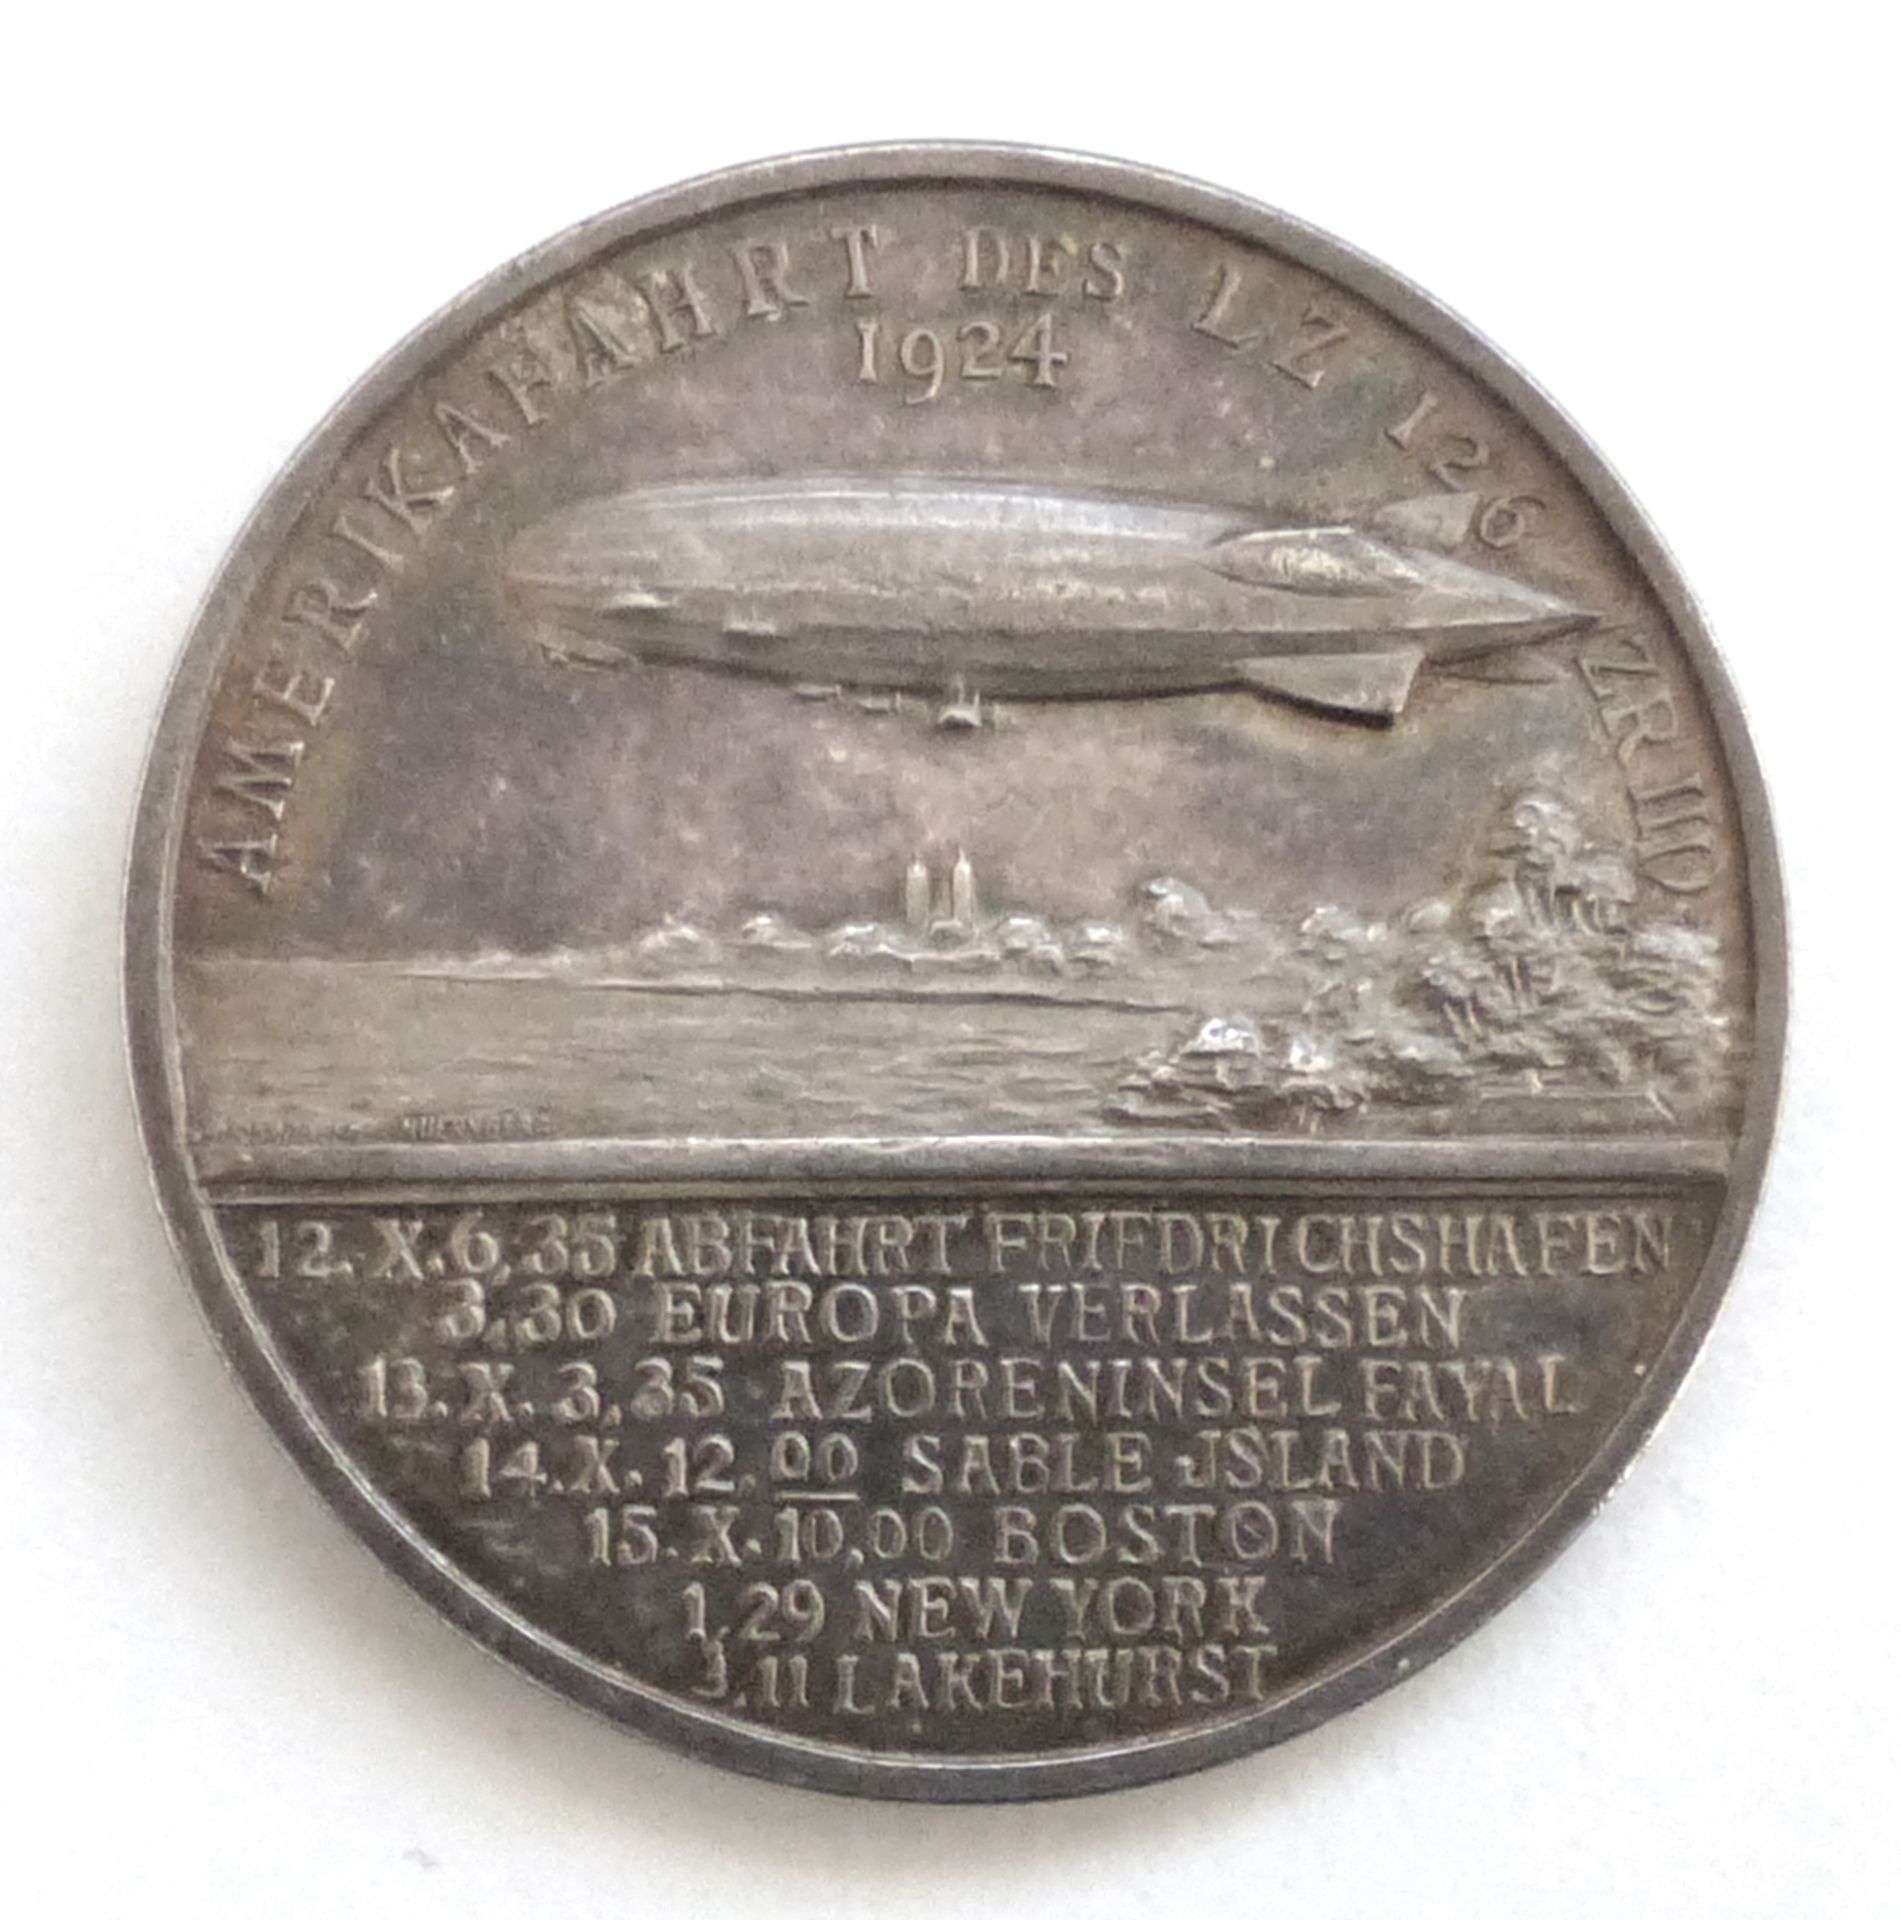 Zeppelin Medaille Amerikafahrt des LZ 126 ZR III 1924 rs Dr. Hugo Eckener Tatkraft sign. Ohrlauer